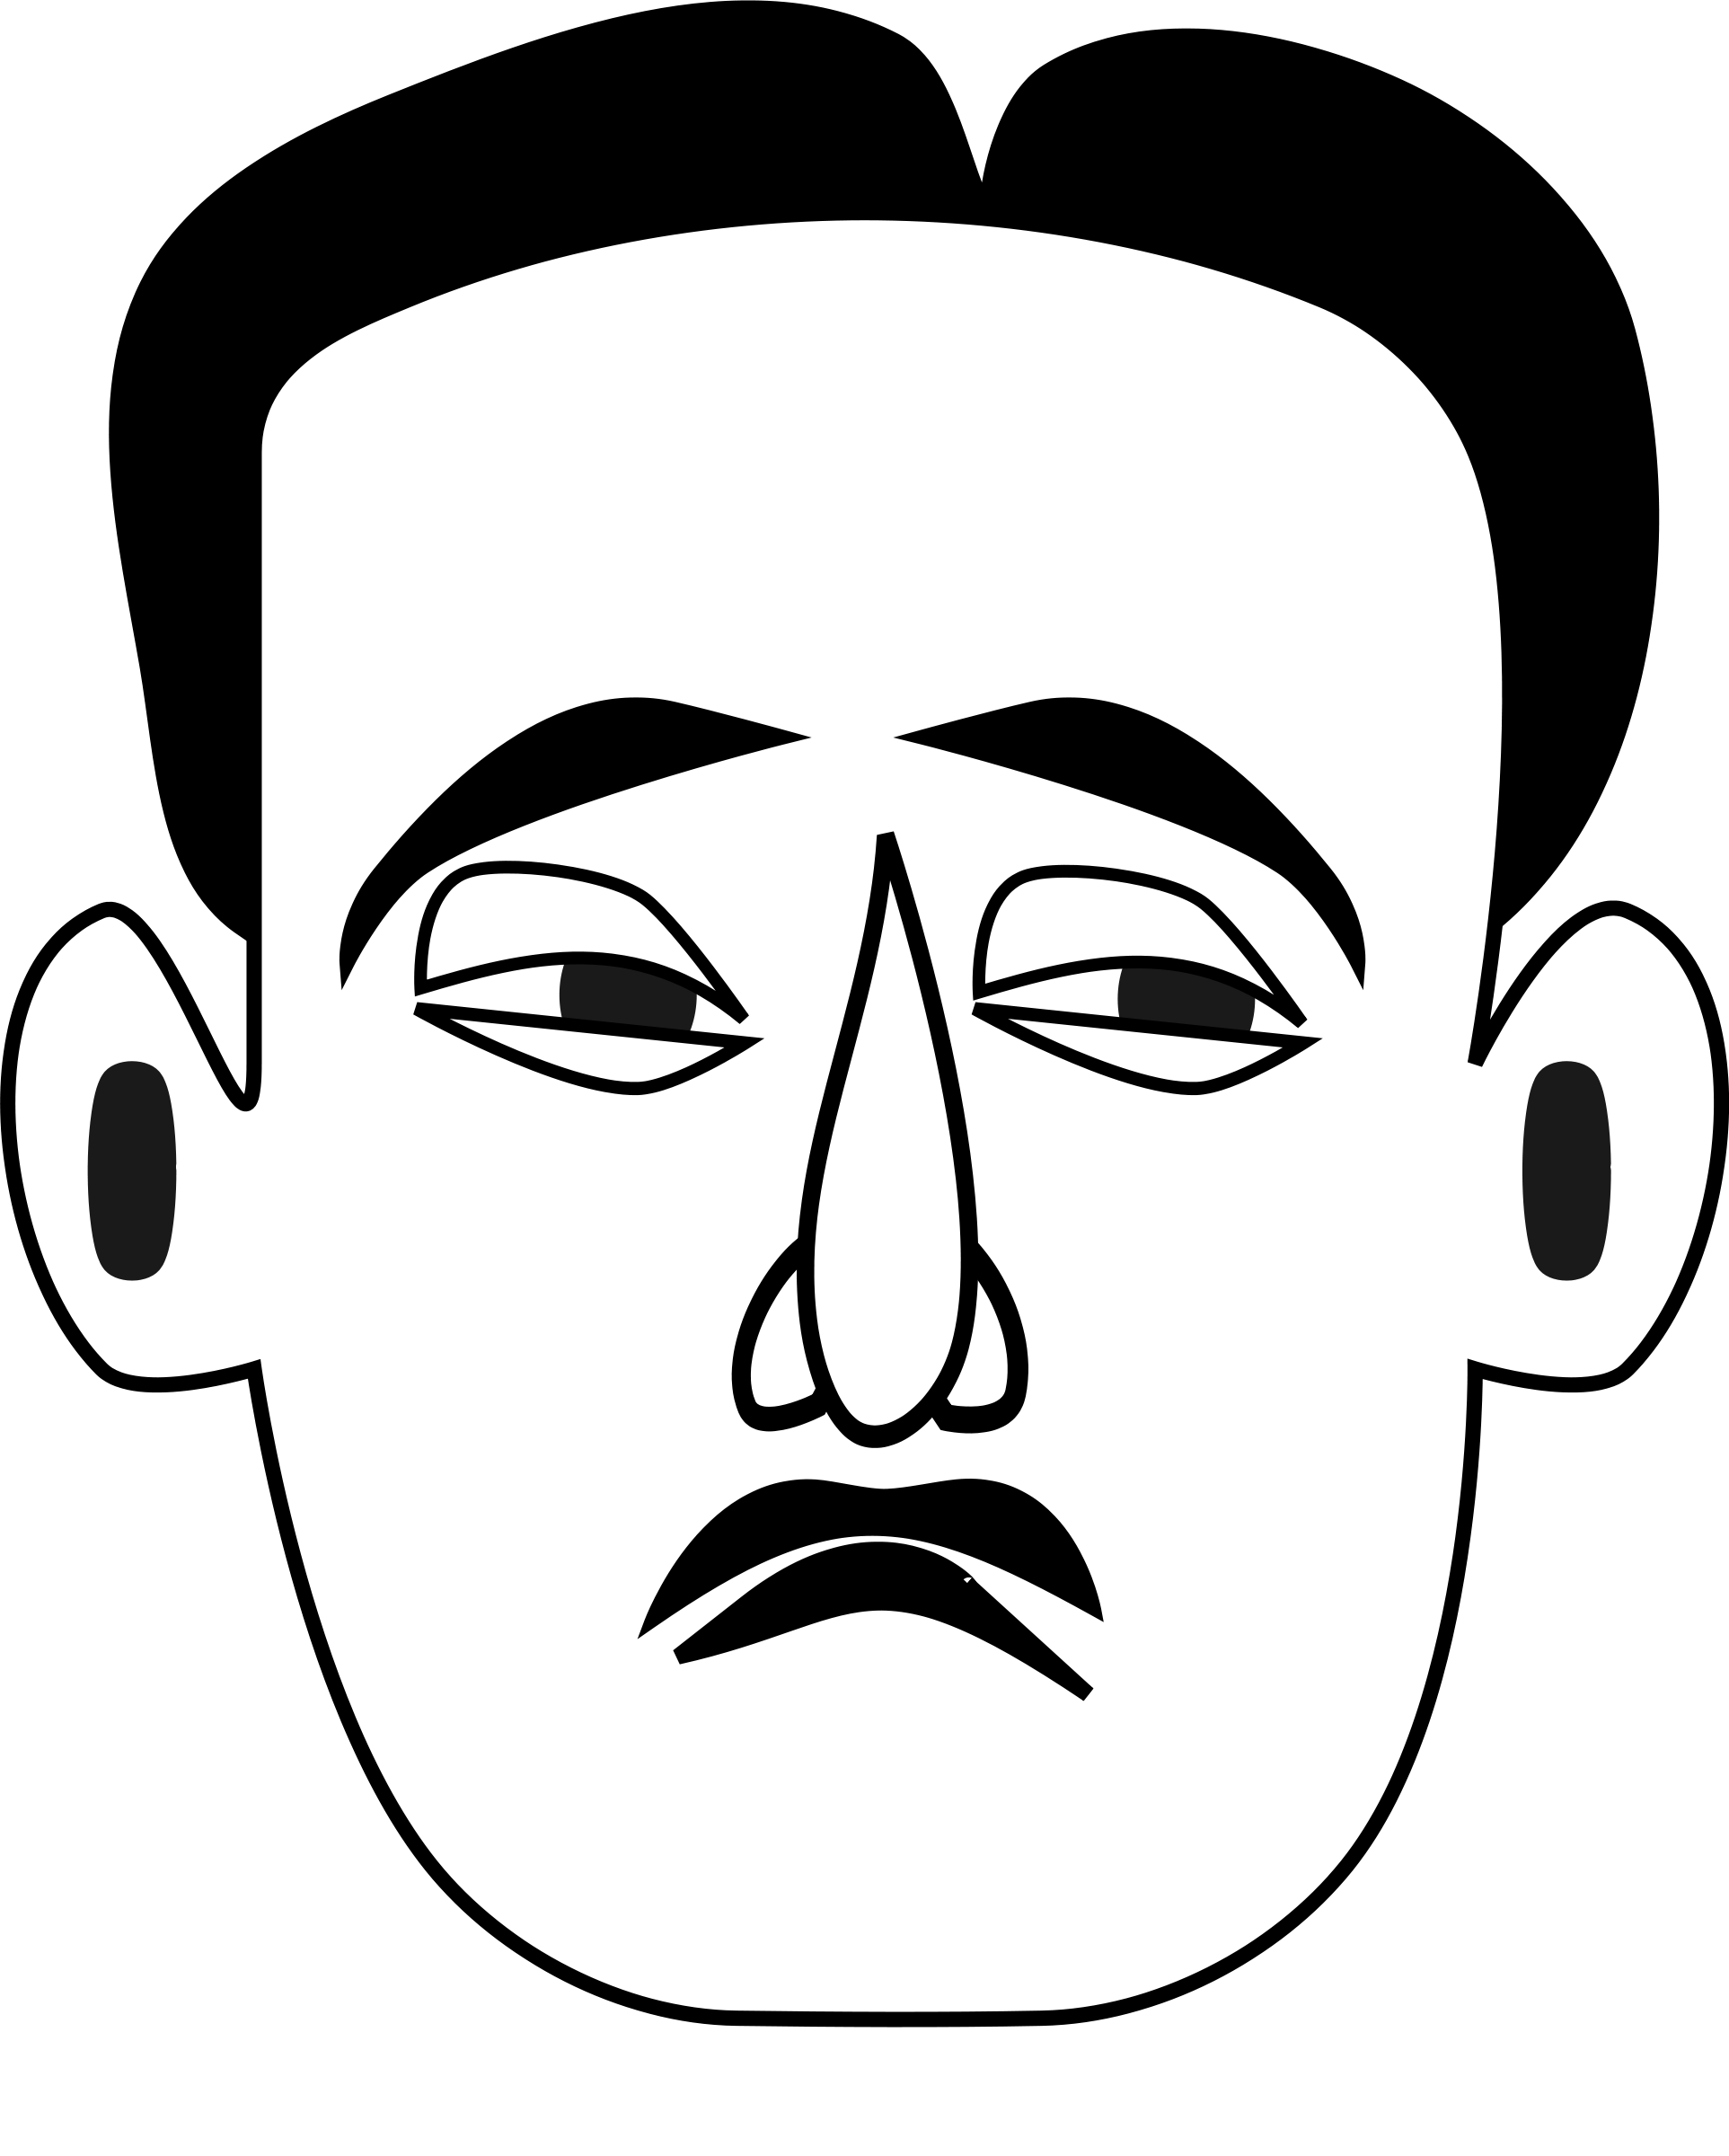 Sad face clip art black and white